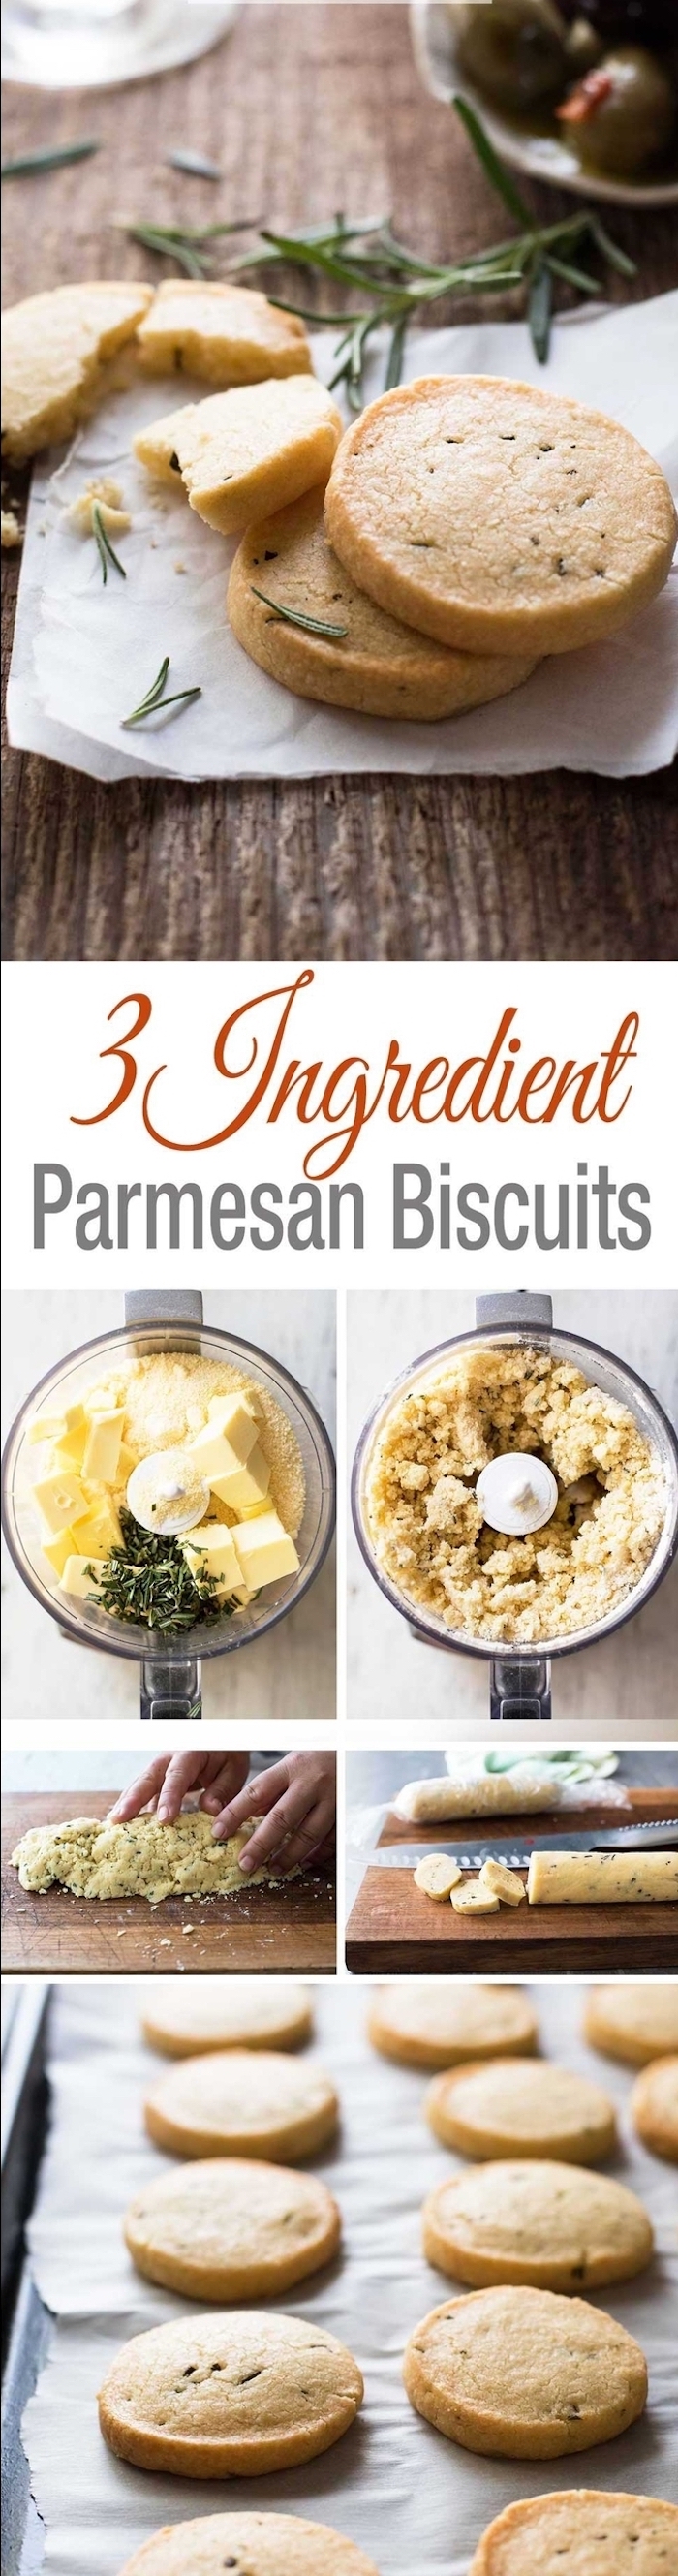 parmesan buscuits, easy vegetarian appetizers, step by step, diy recipe